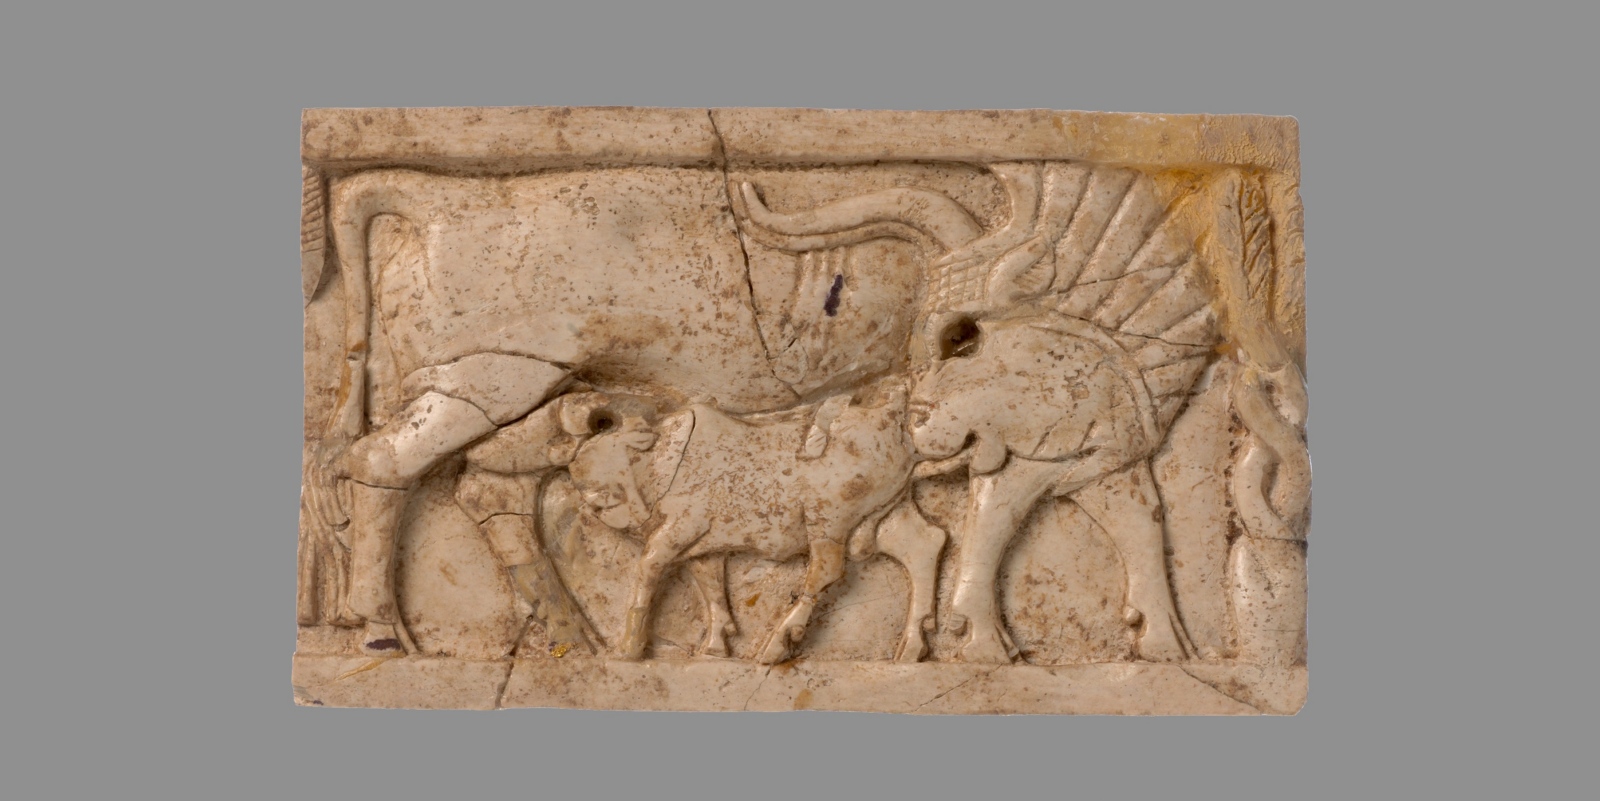 Assyr. Elfenbeinschnitzerei: Kuh säugt Kalb, 9.-8. Jh. v. Chr., CC0 1.0 Universal Public Domain Dedication